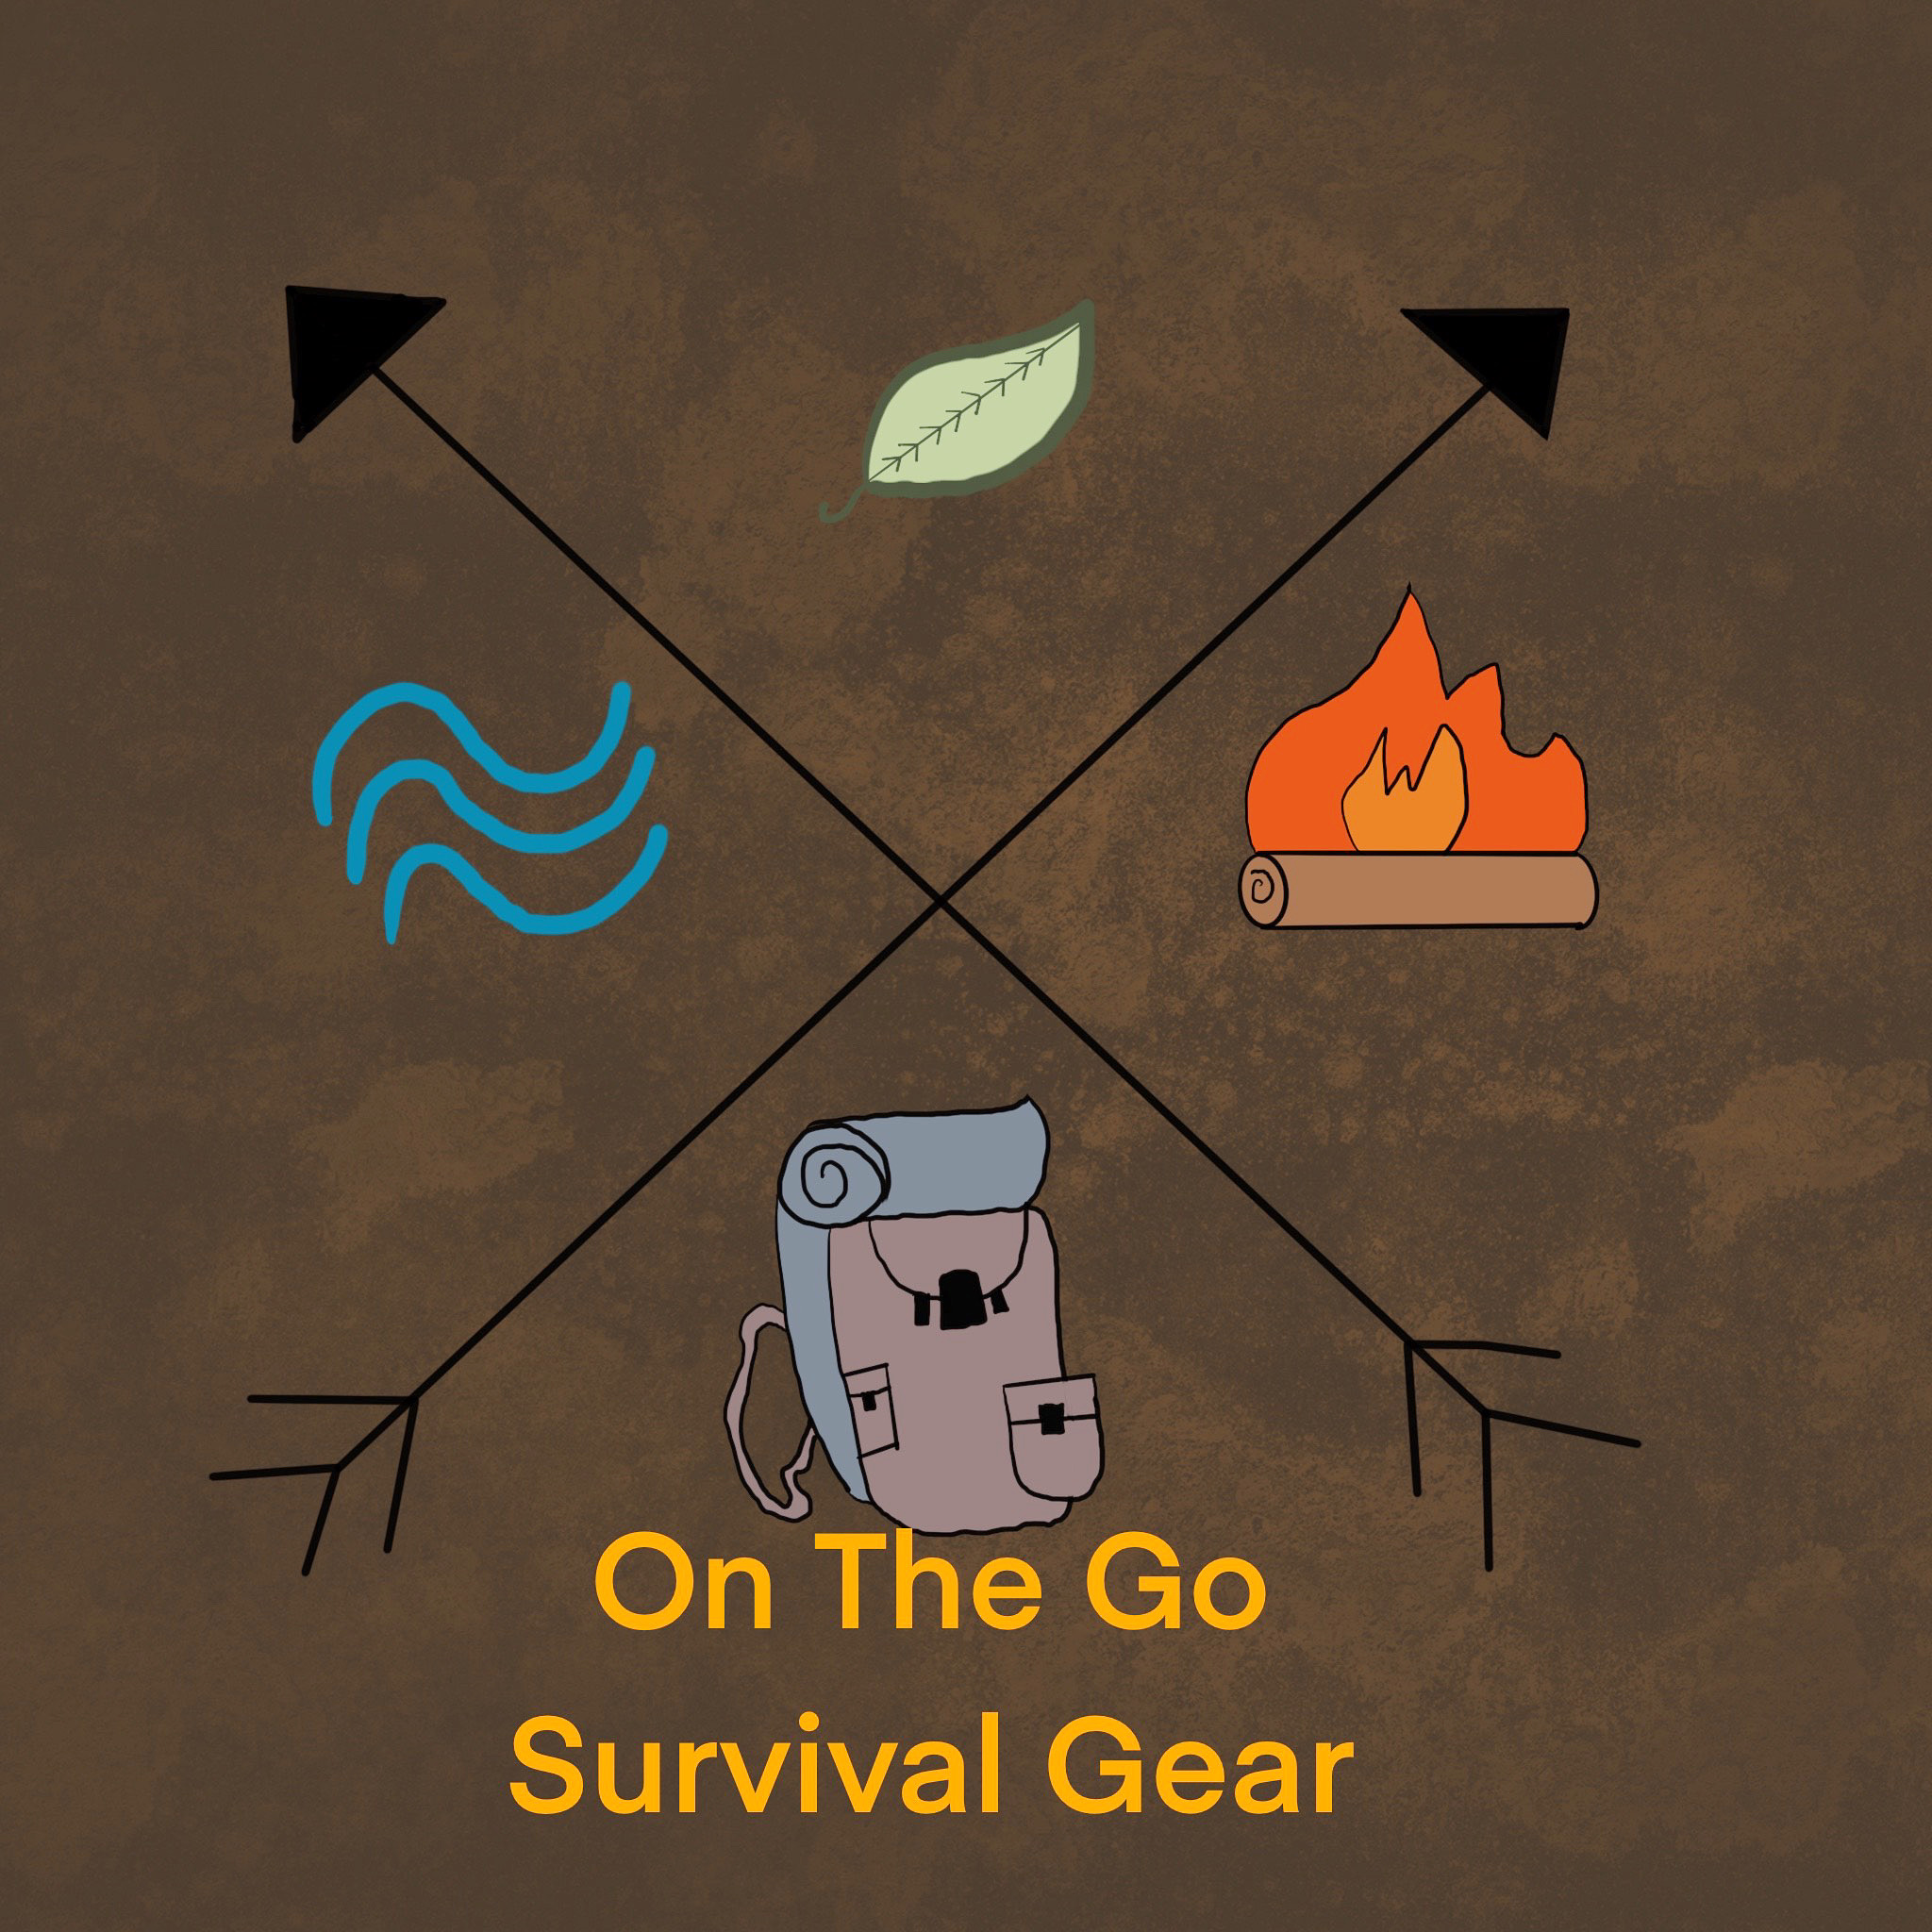 On the Go Survival Gear